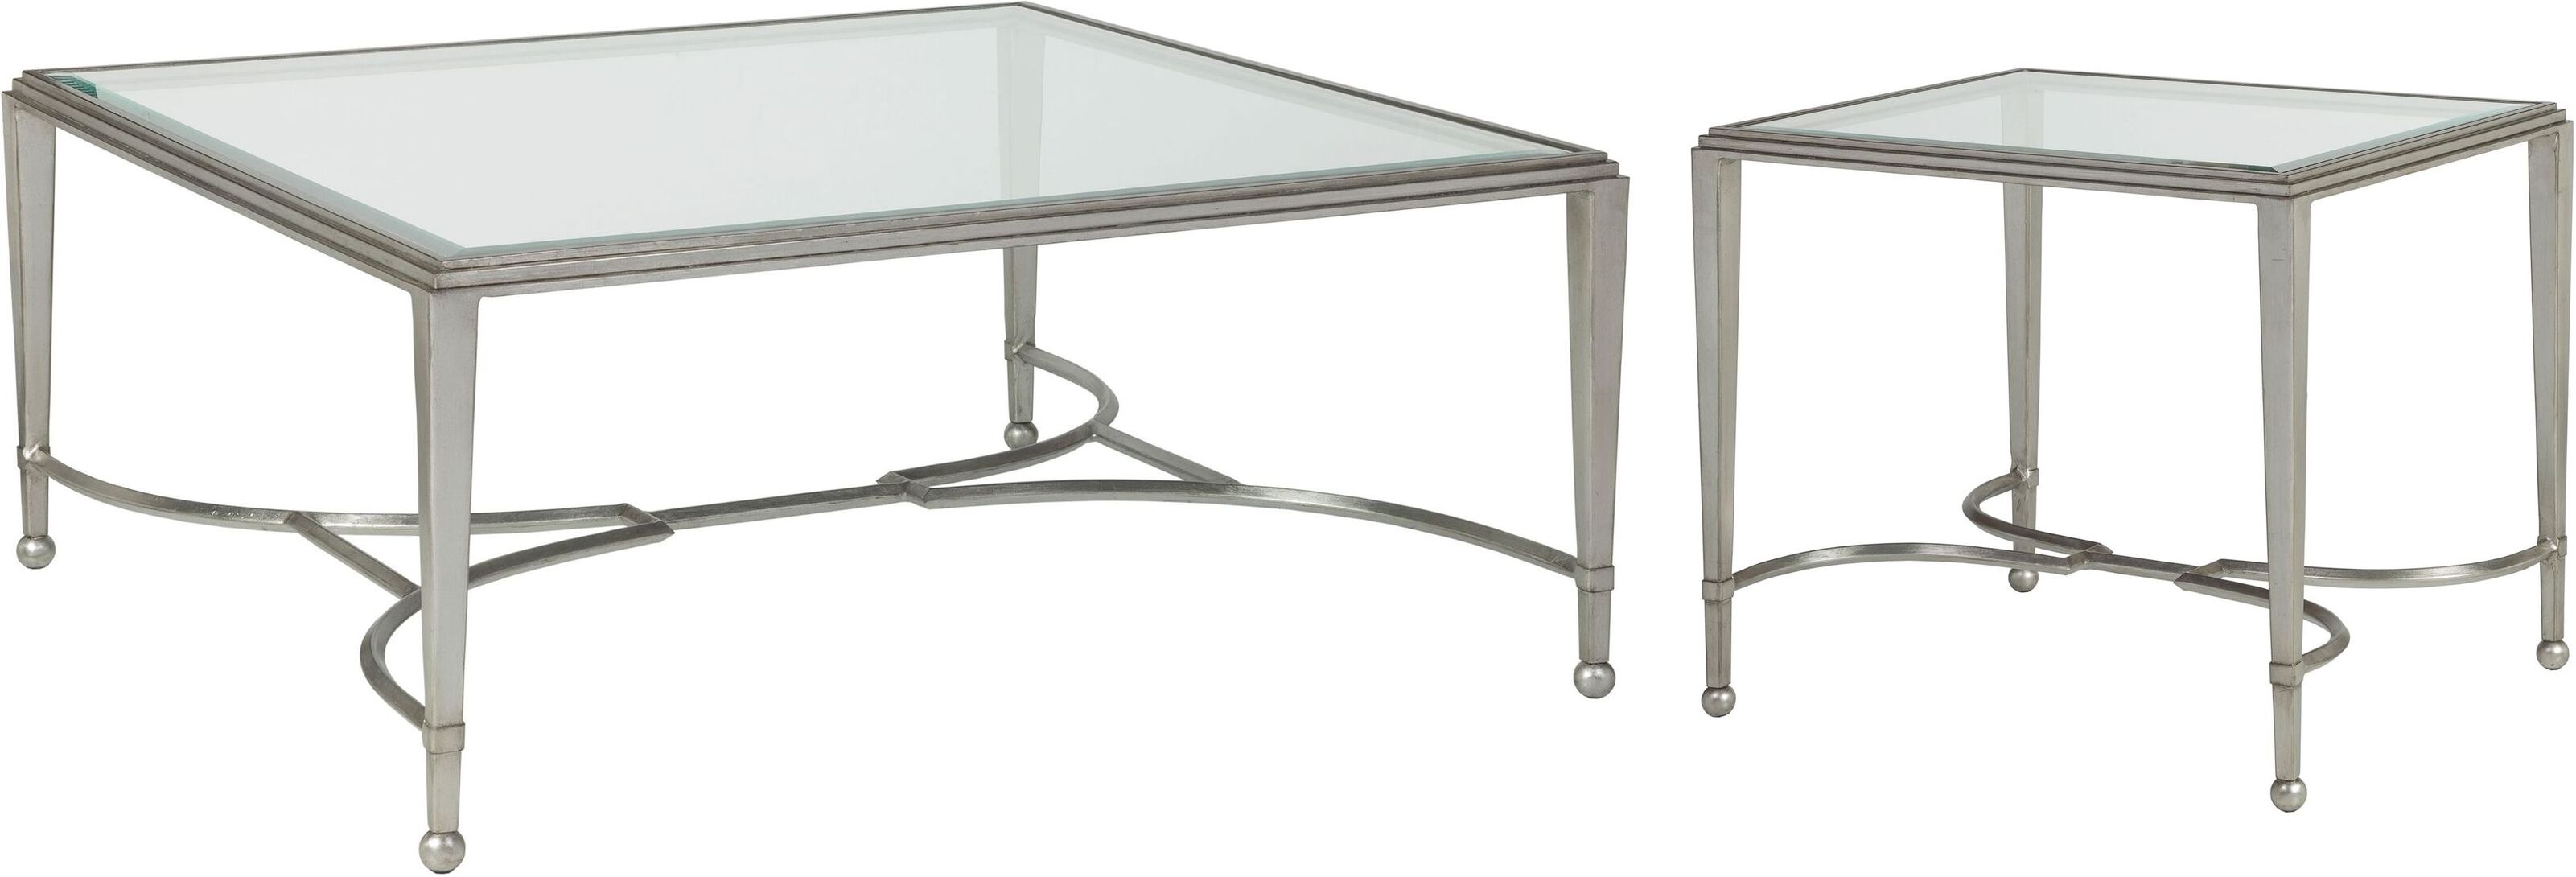 https://cdn.1stopbedrooms.com/media/catalog/product/m/e/metal-designs-silver-leaf-sangiovese-square-occasional-table-set_qb13305444.jpg